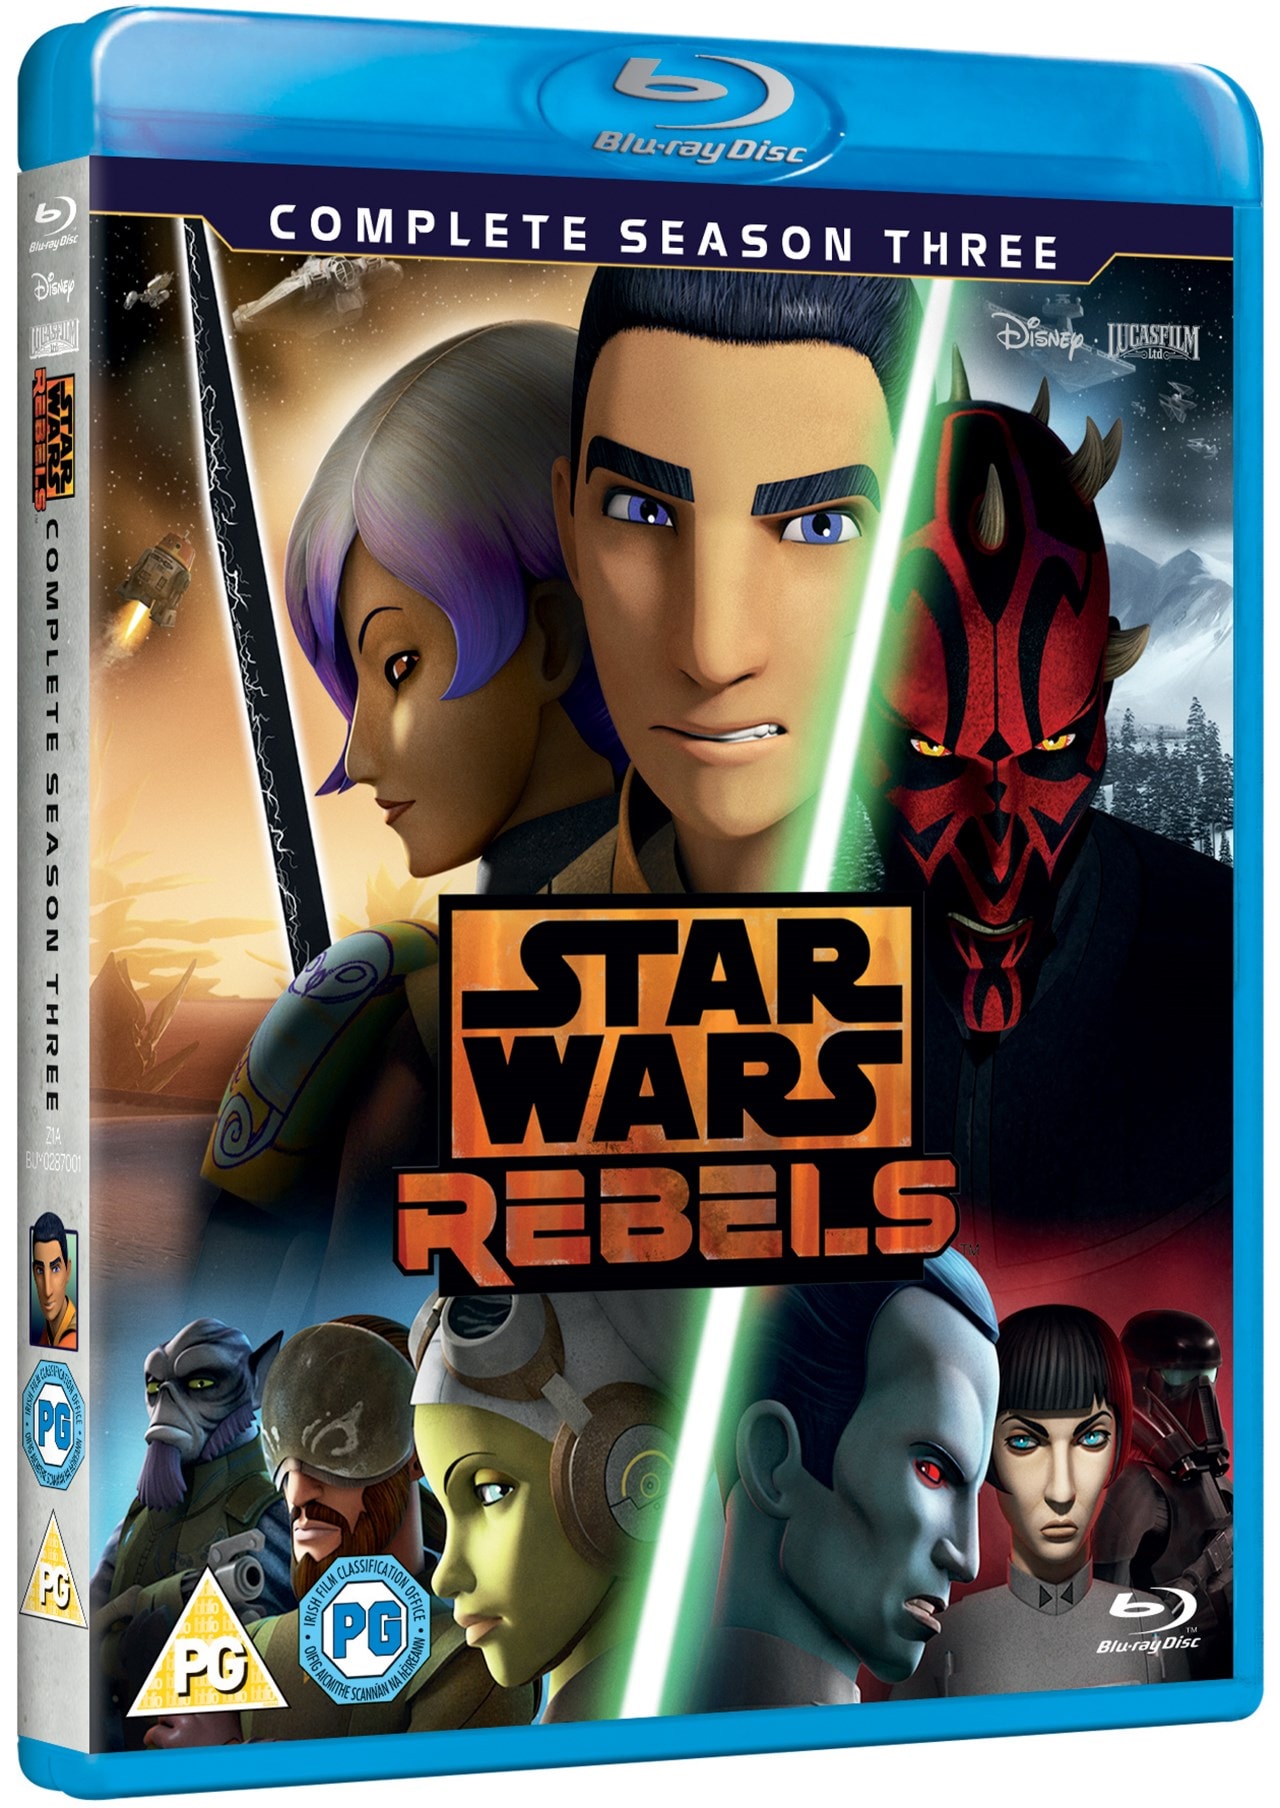 rebels blu ray box set